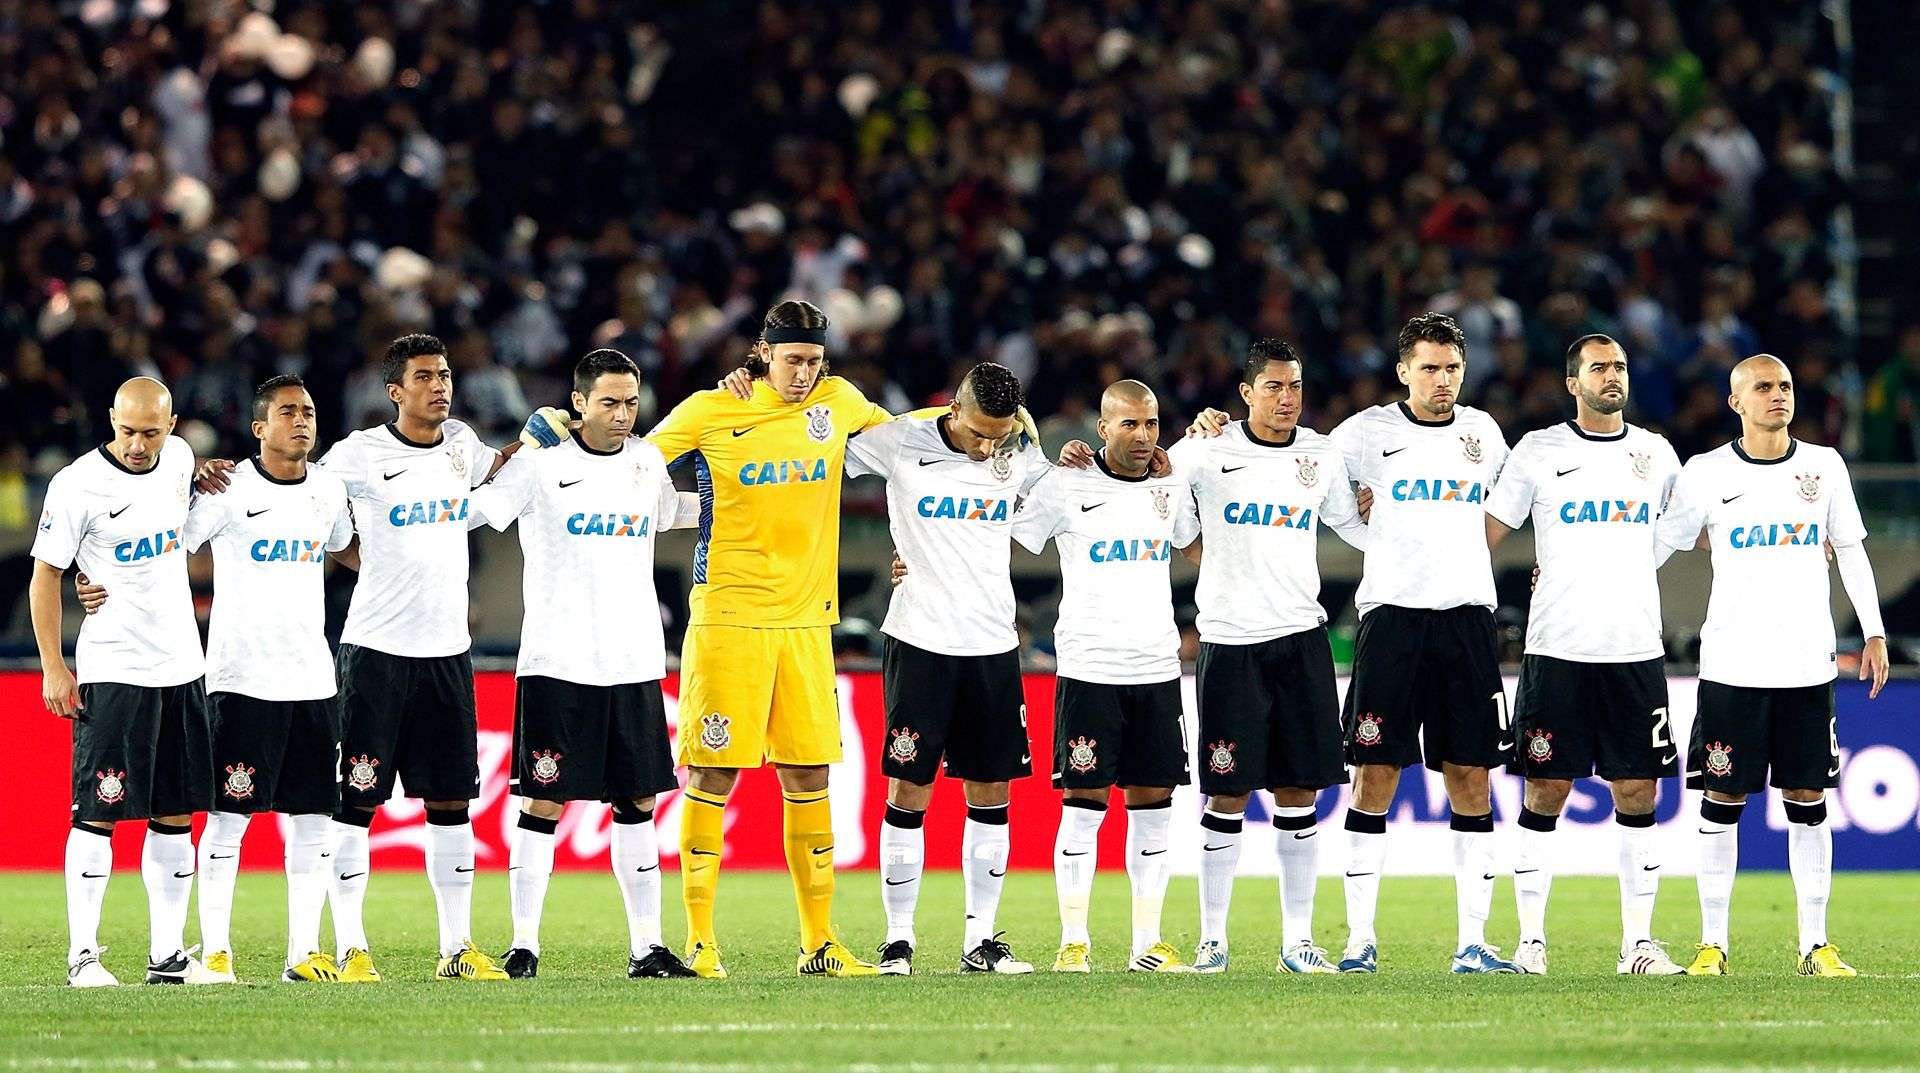 Corinthians Club World Cup 2012 Yokohama Japan